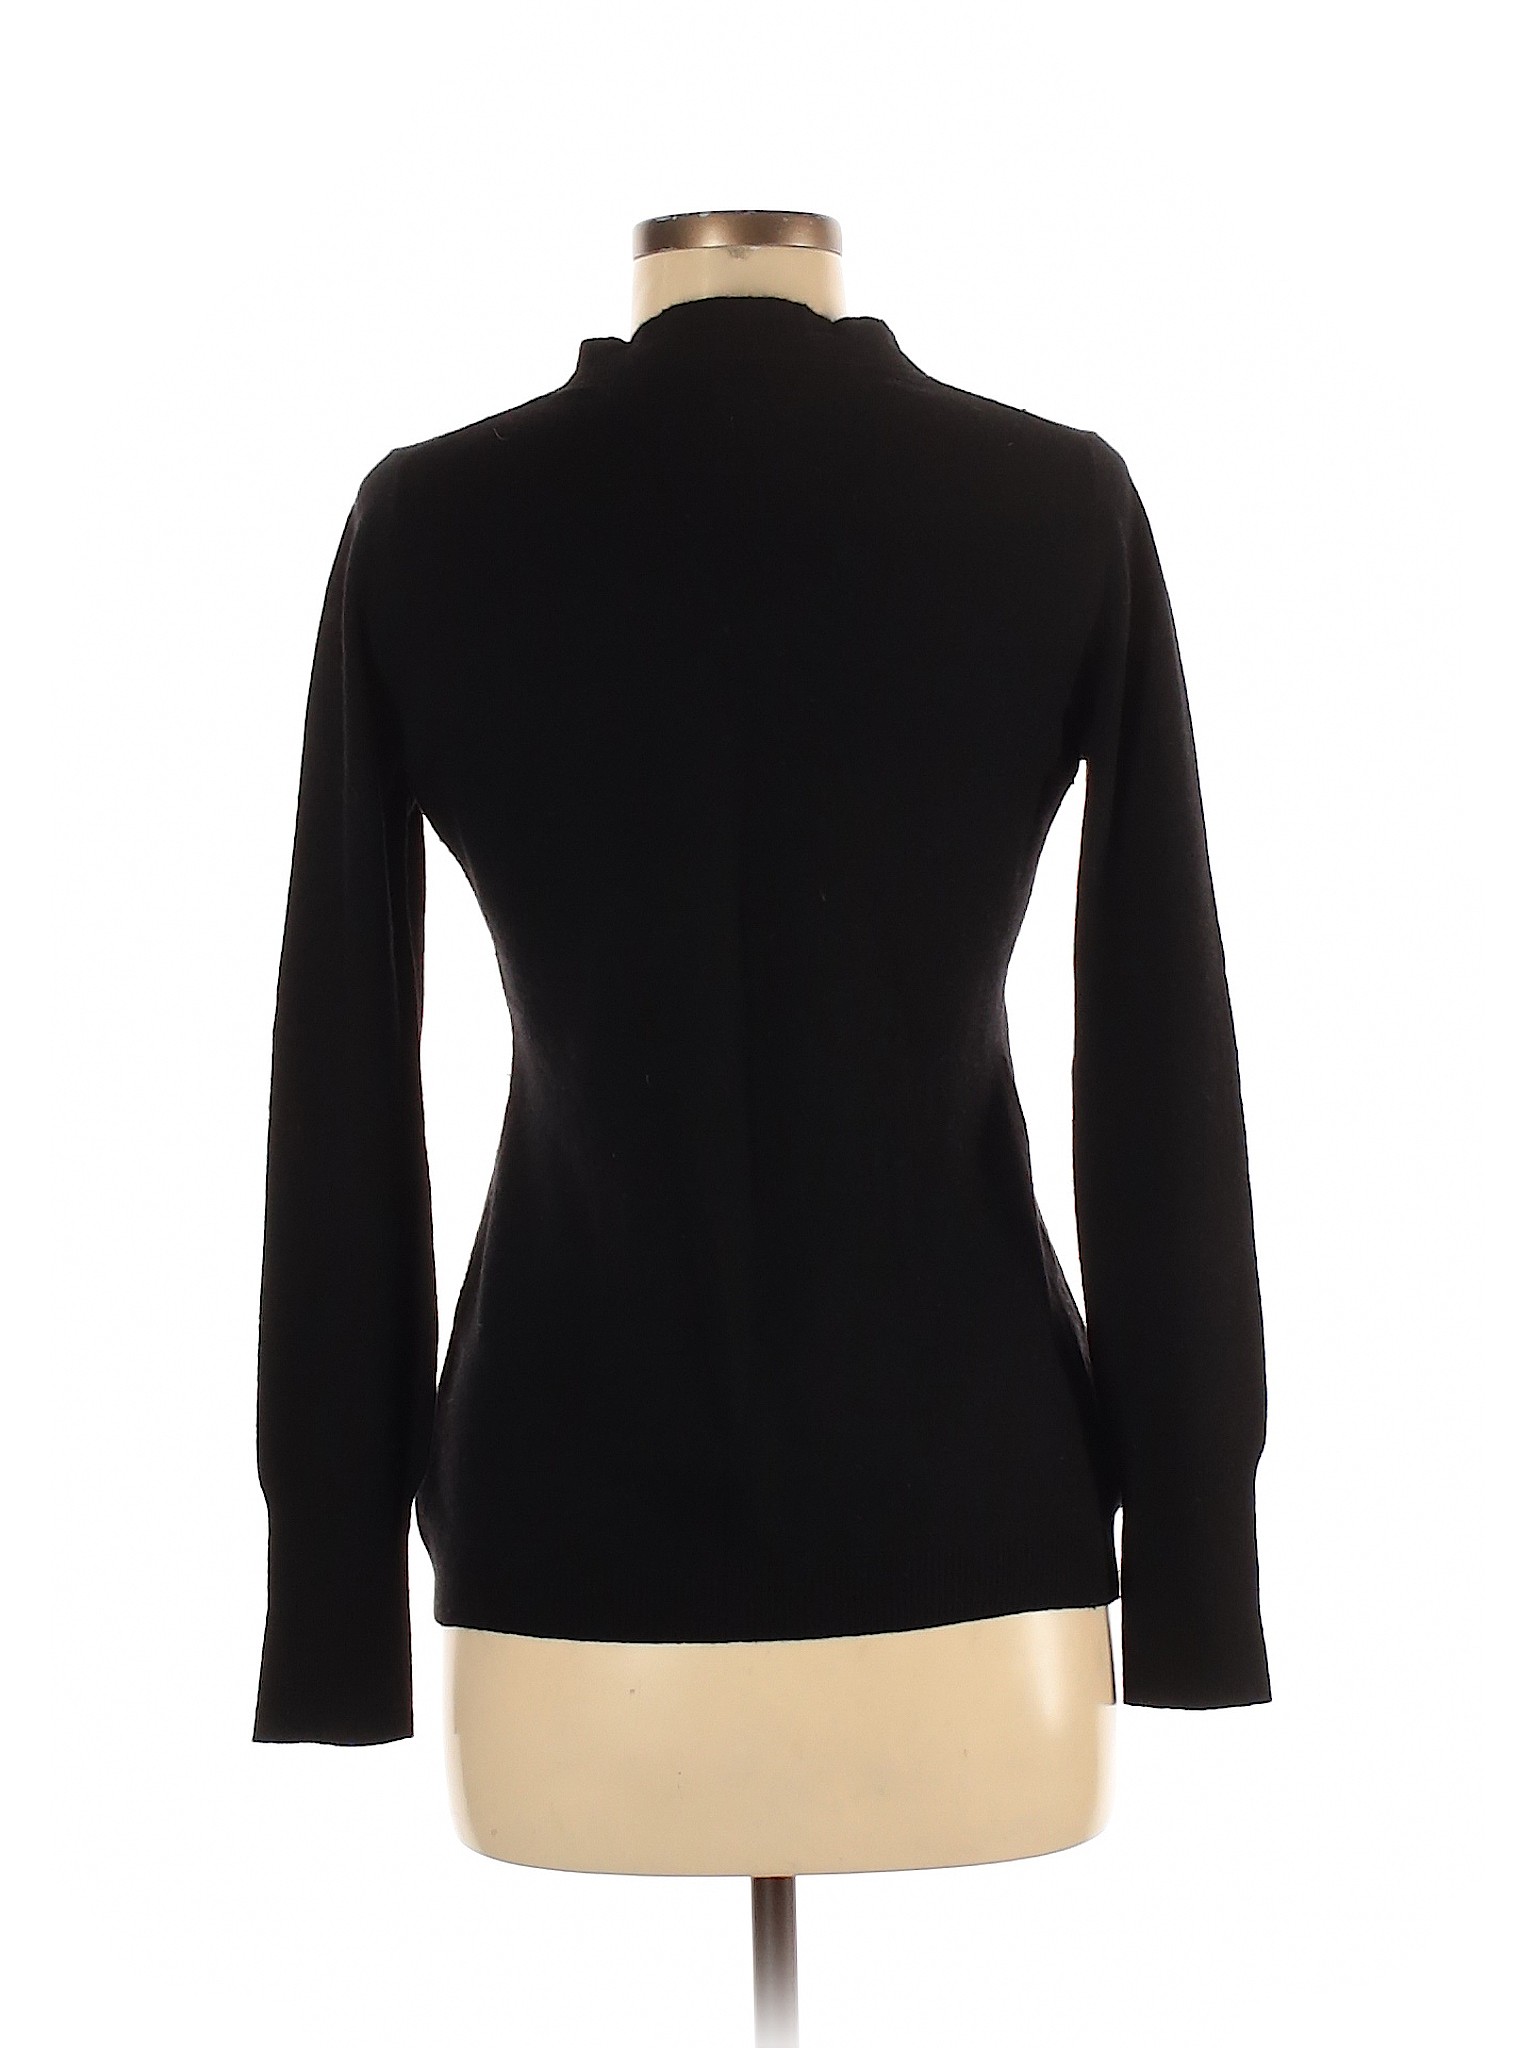 Banana Republic Women Black Pullover Sweater M | eBay